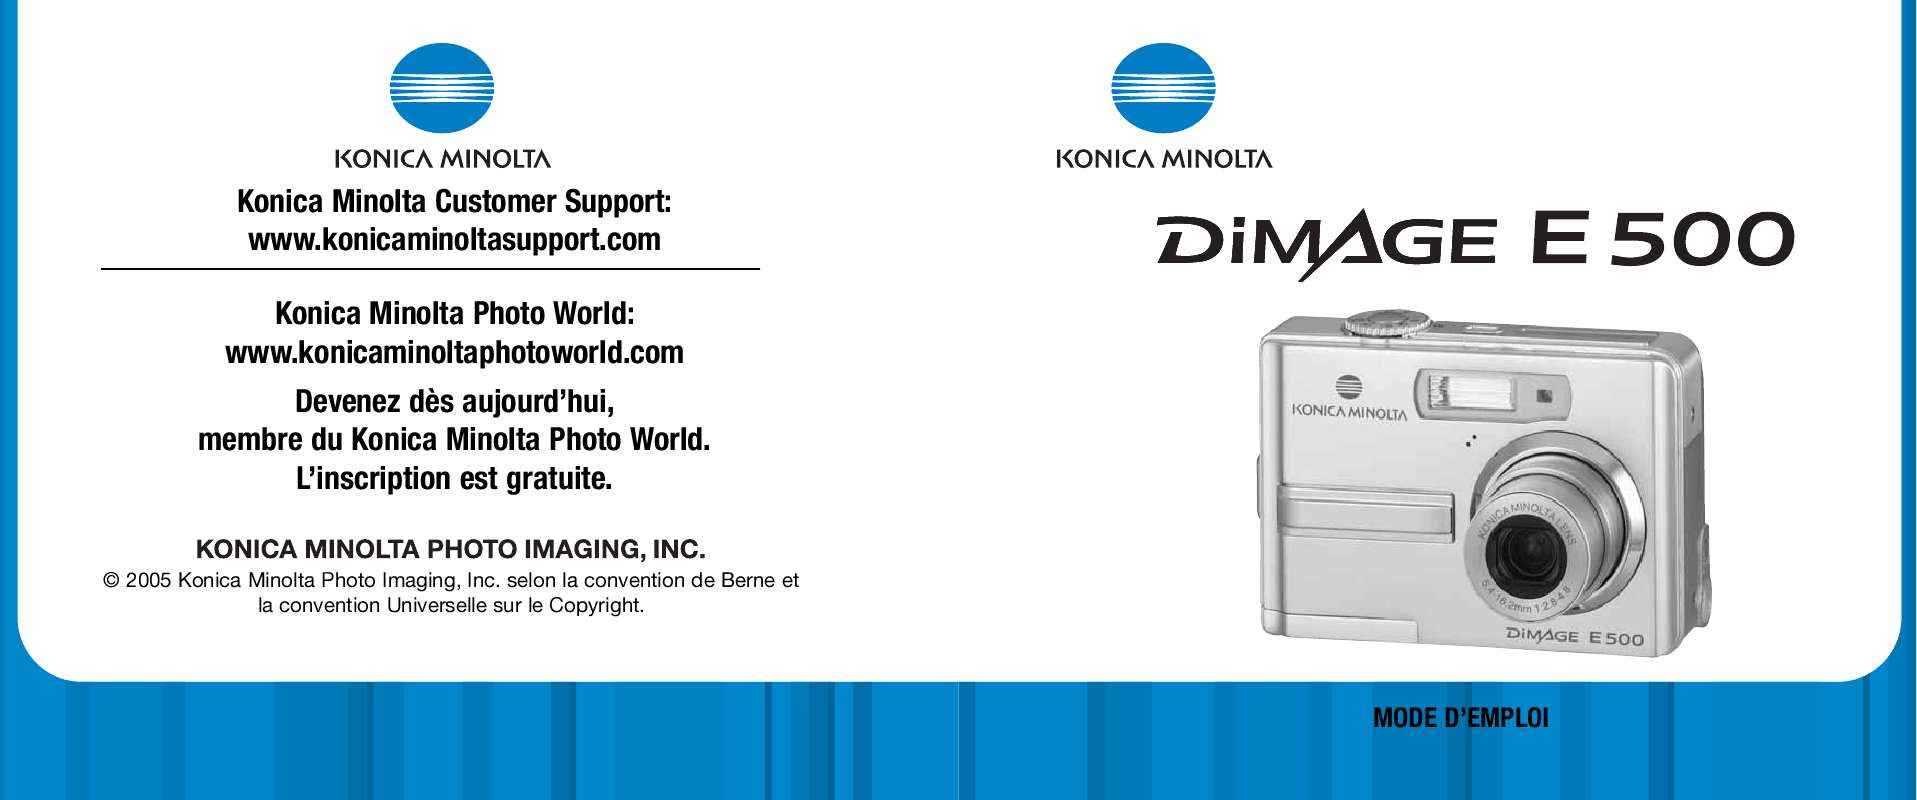 Guide utilisation KONICA MINOLTA DIMAGE E500  de la marque KONICA MINOLTA